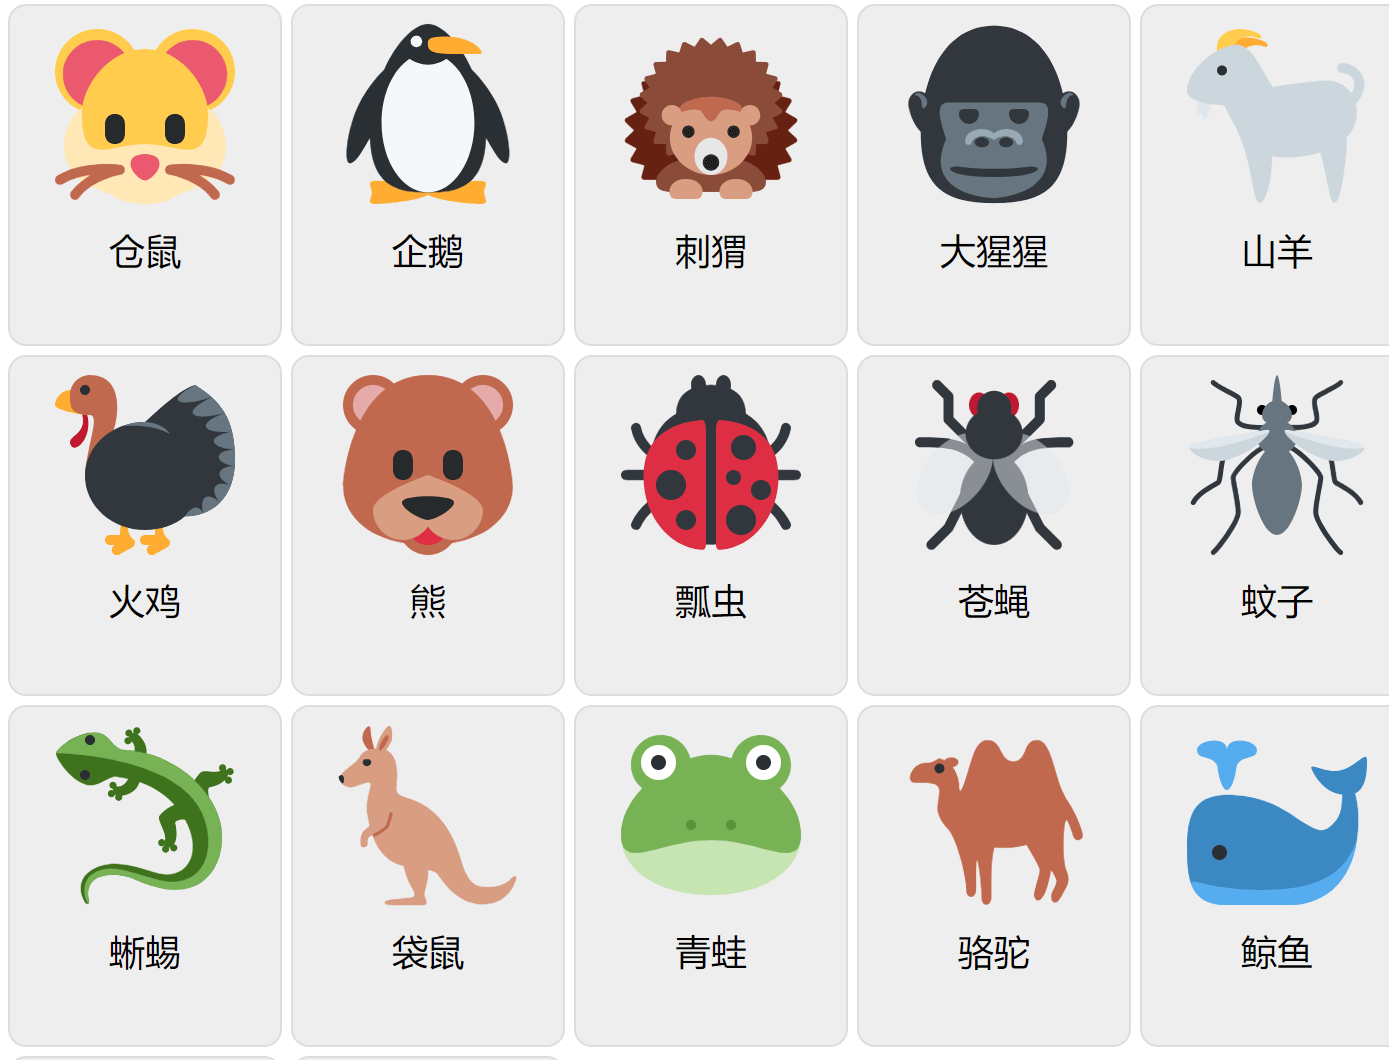 Animales en chino mandarín 2